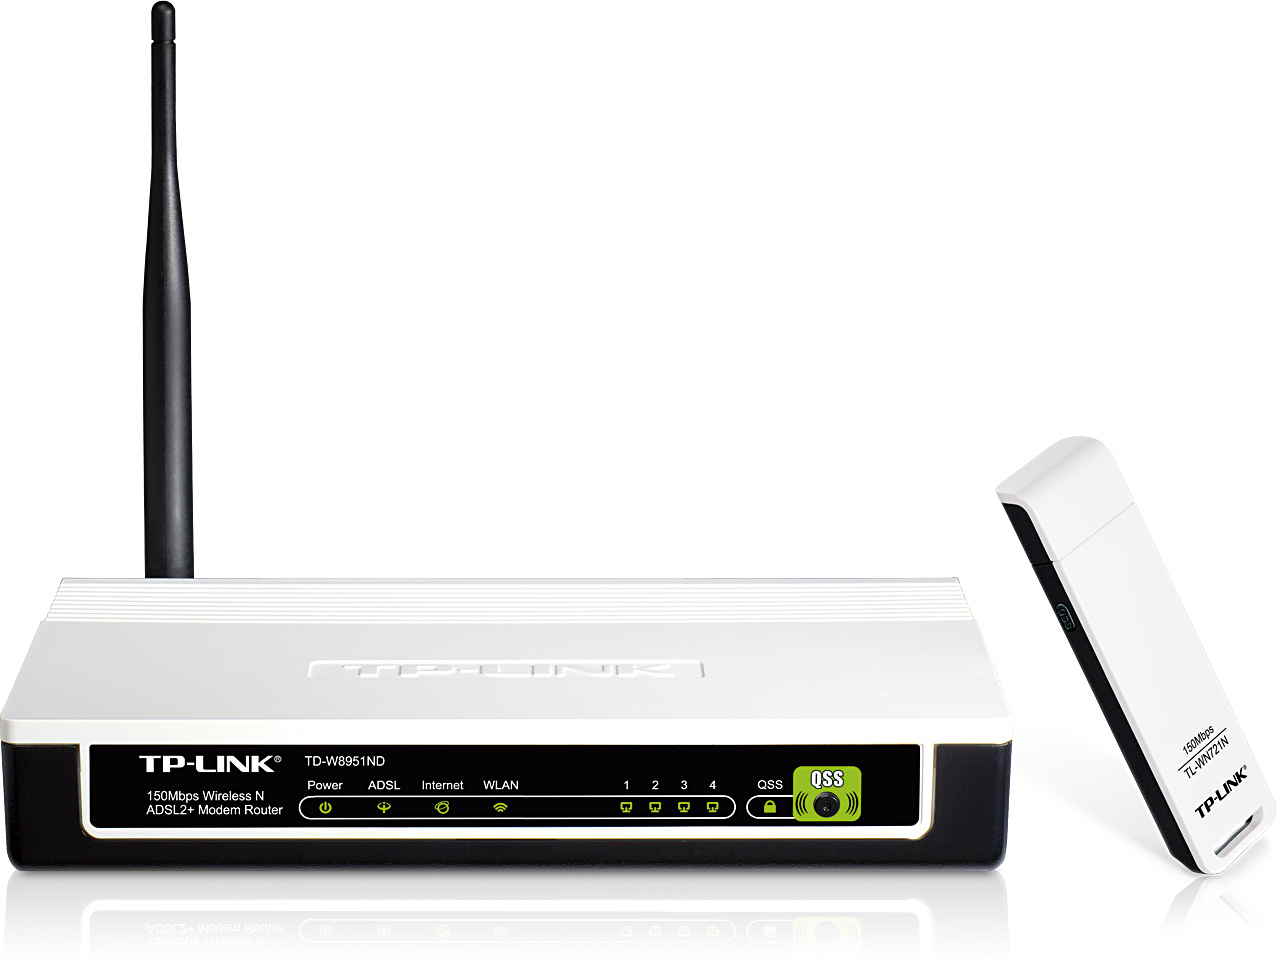 Tp-link Kit Wl-n 300 Mps Routeer Usb